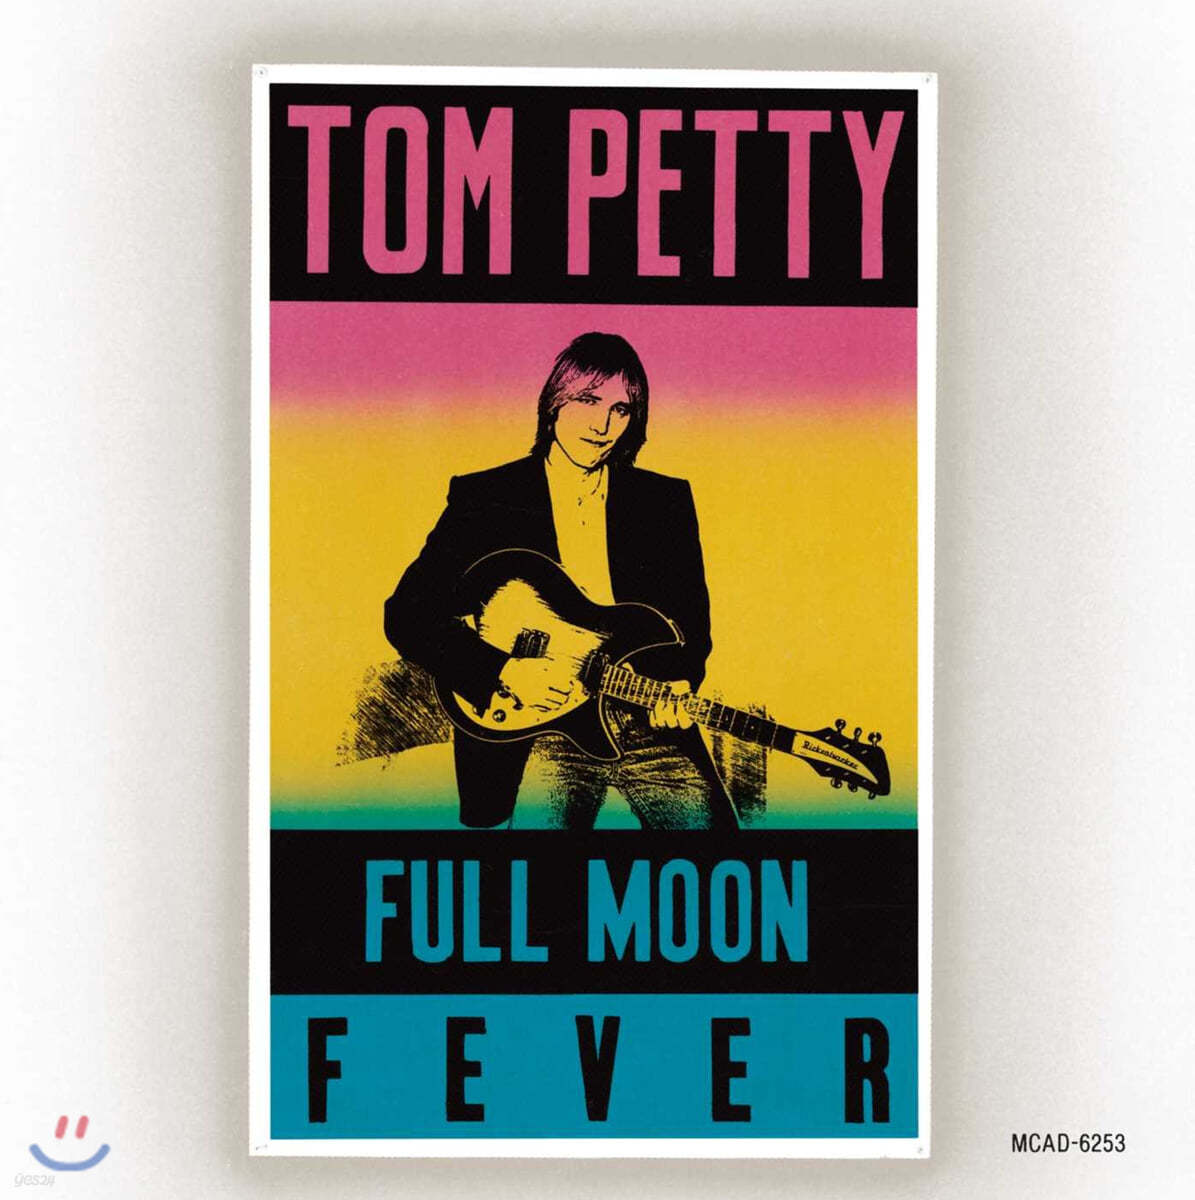 Tom Petty - Full Moon Fever 톰 페티 솔로 데뷔 앨범